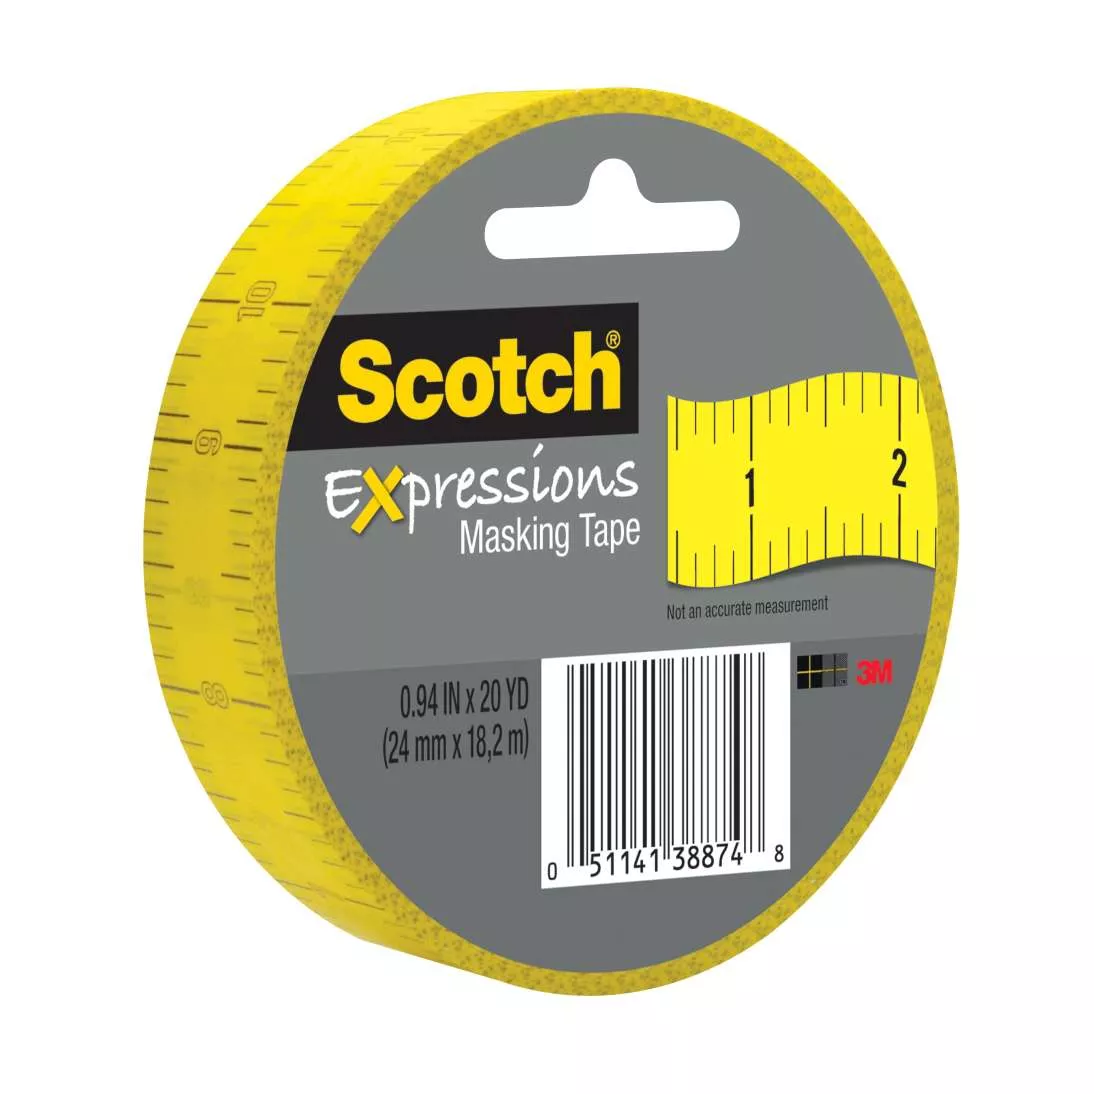 Scotch® Expressions Masking Tape 3437-P5, .94 in x 20 yd (24 mm x 18,2
m), Ruler